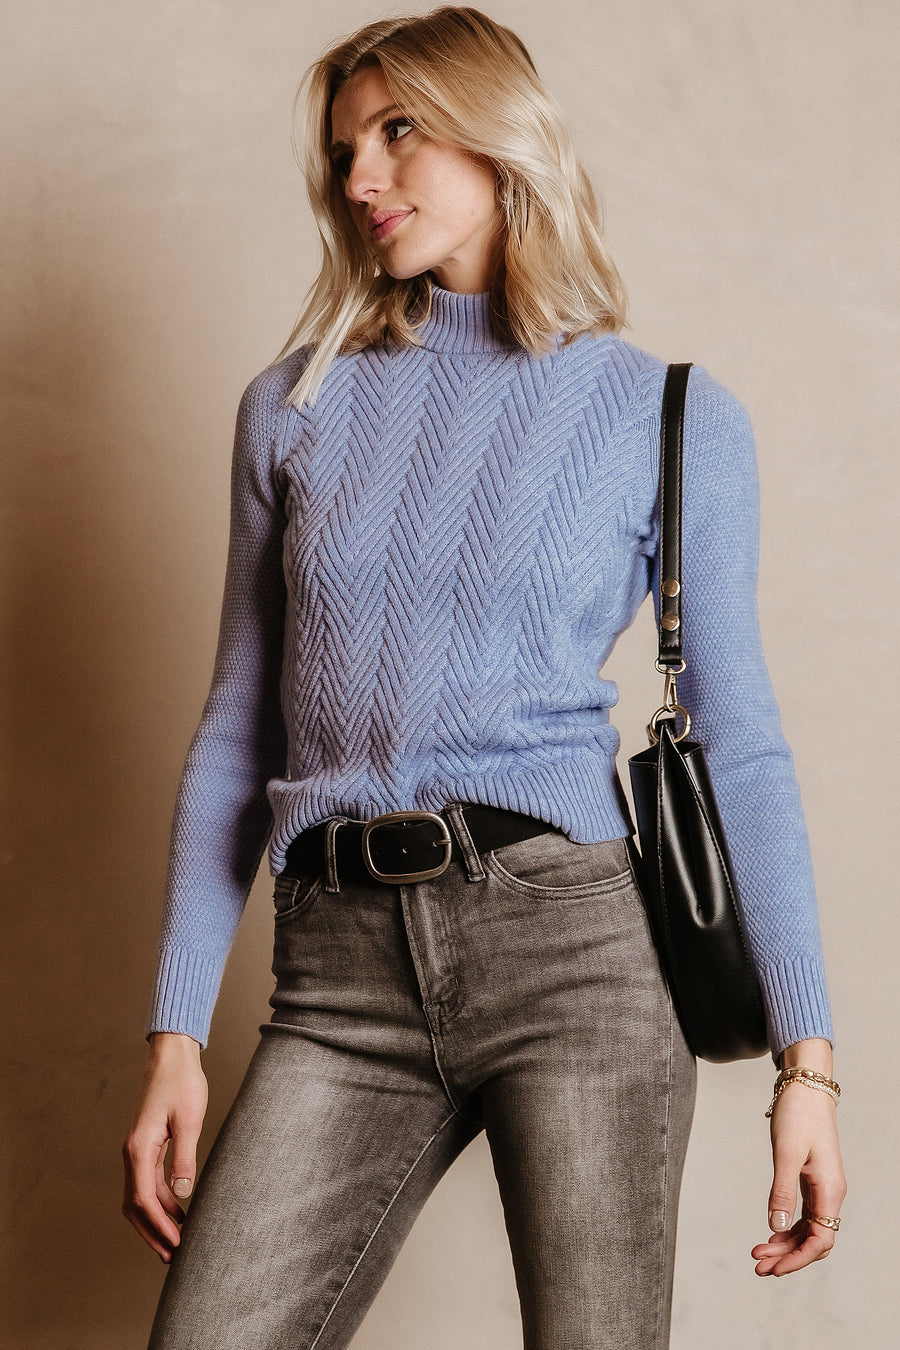 Vero Moda Ethel Sweater - FINAL SALE –